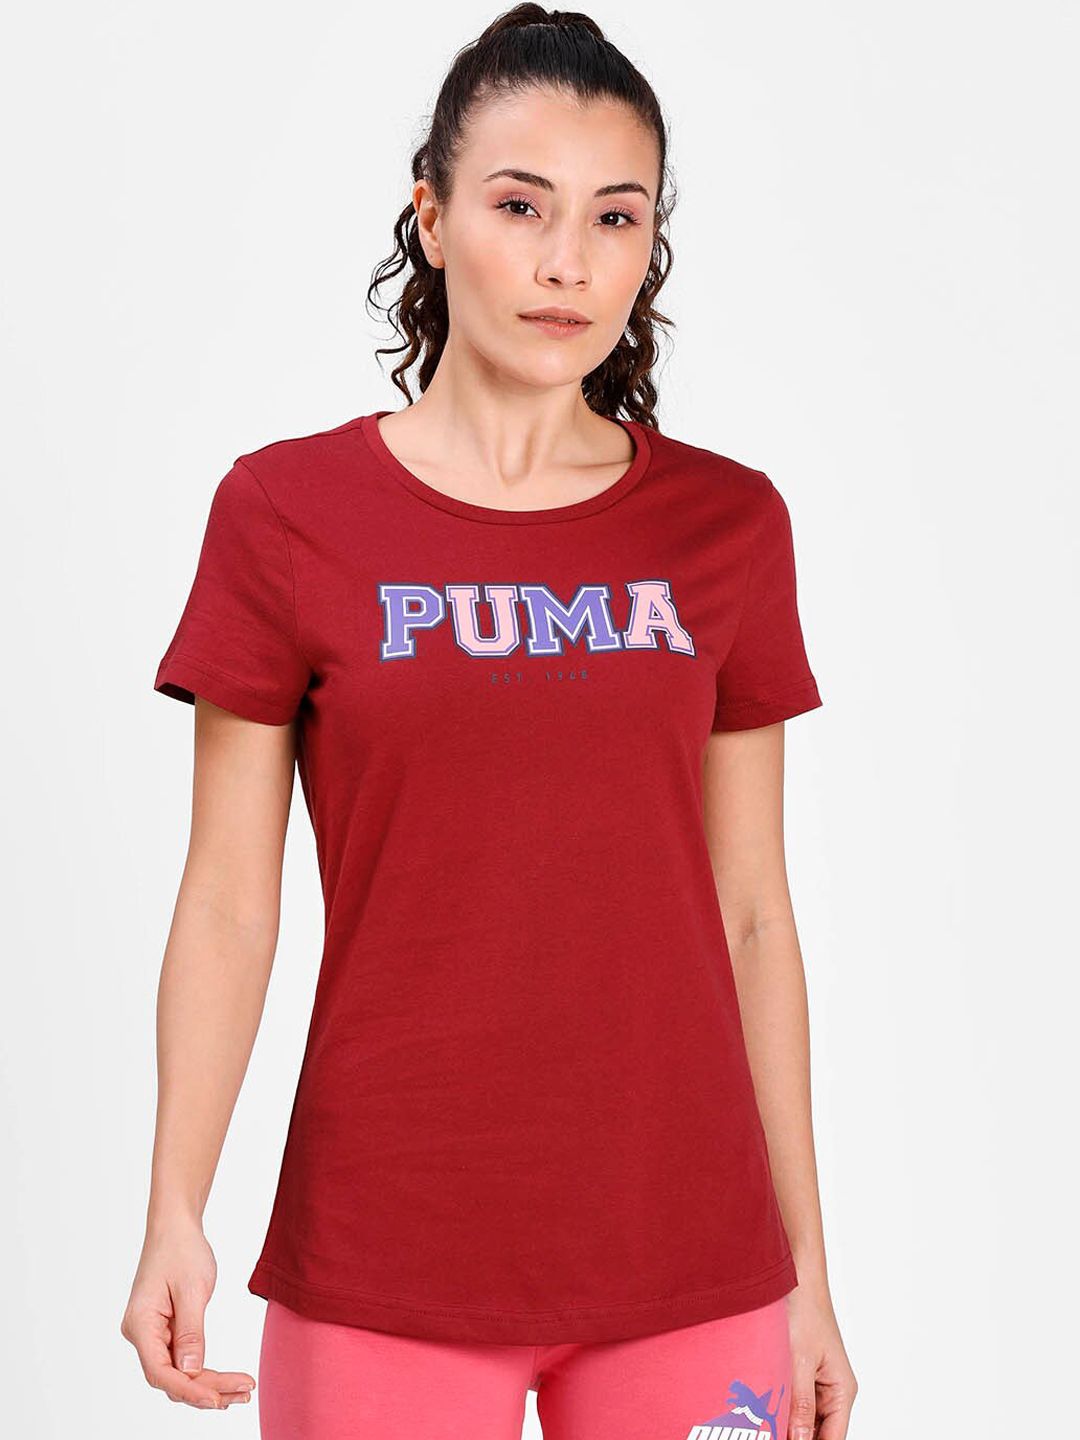 Puma Women Red Printed Round Neck Collegiate Graphic Tee Price in India